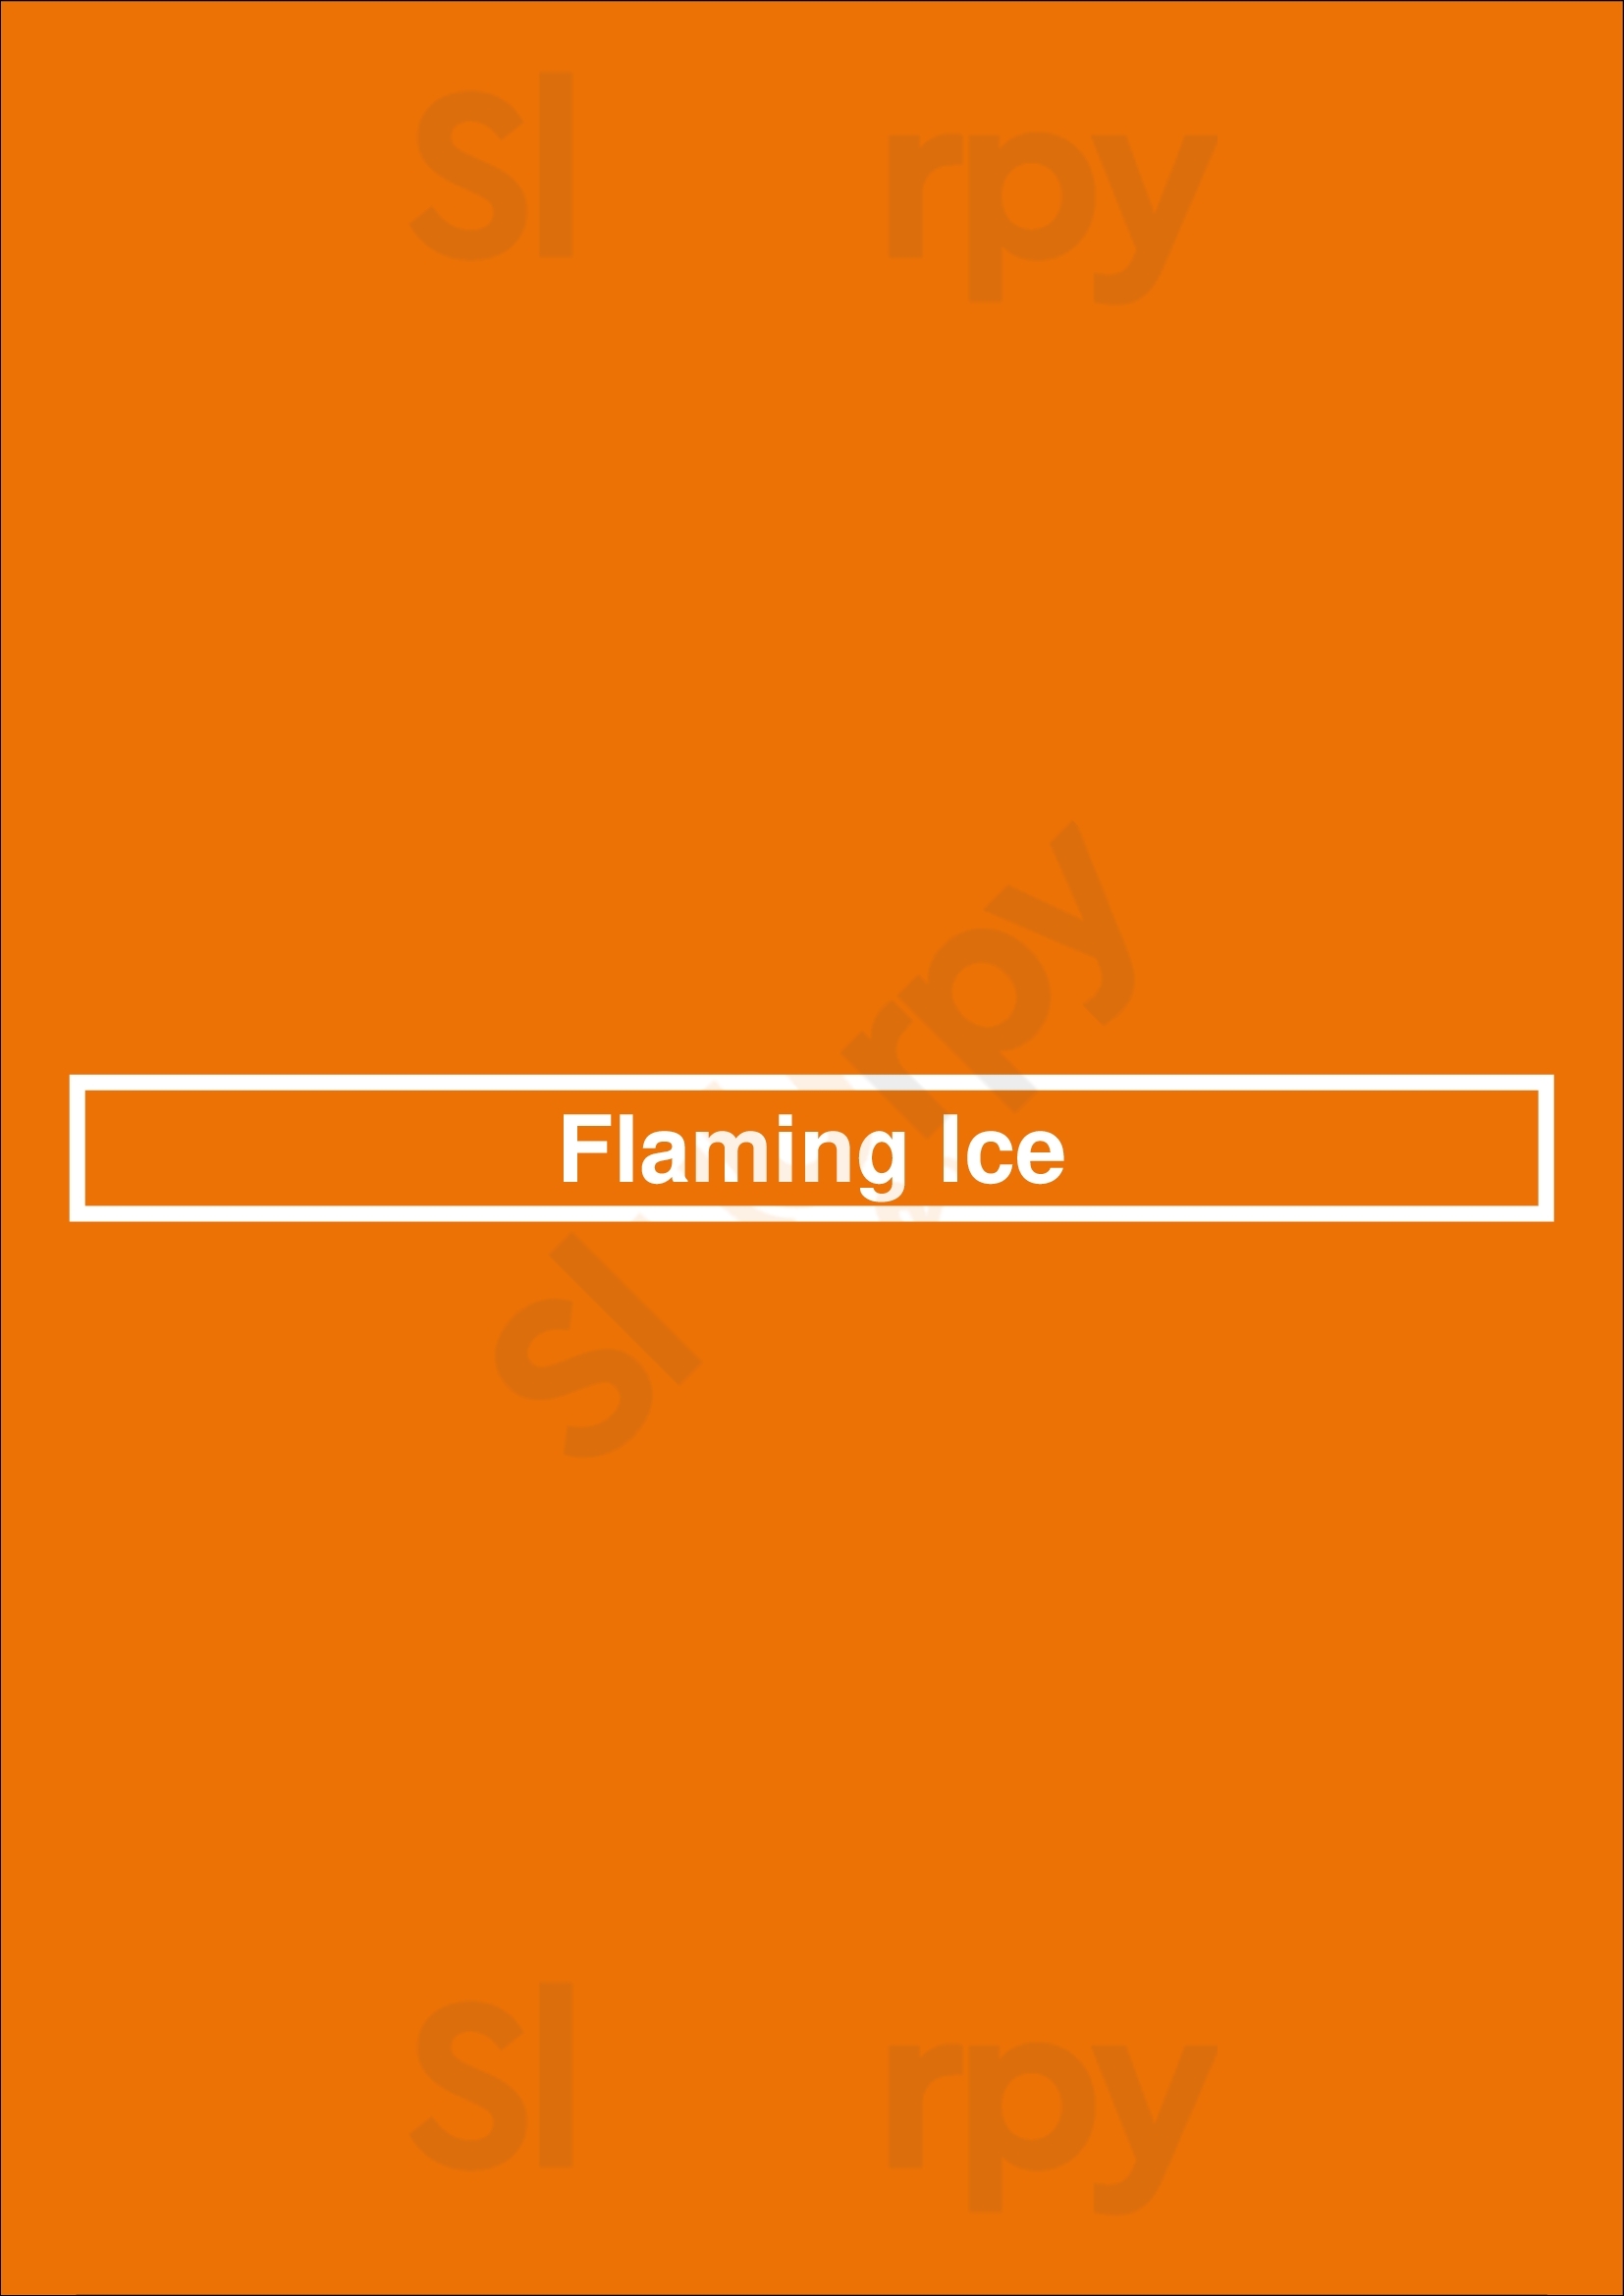 Flaming Ice Surrey Menu - 1